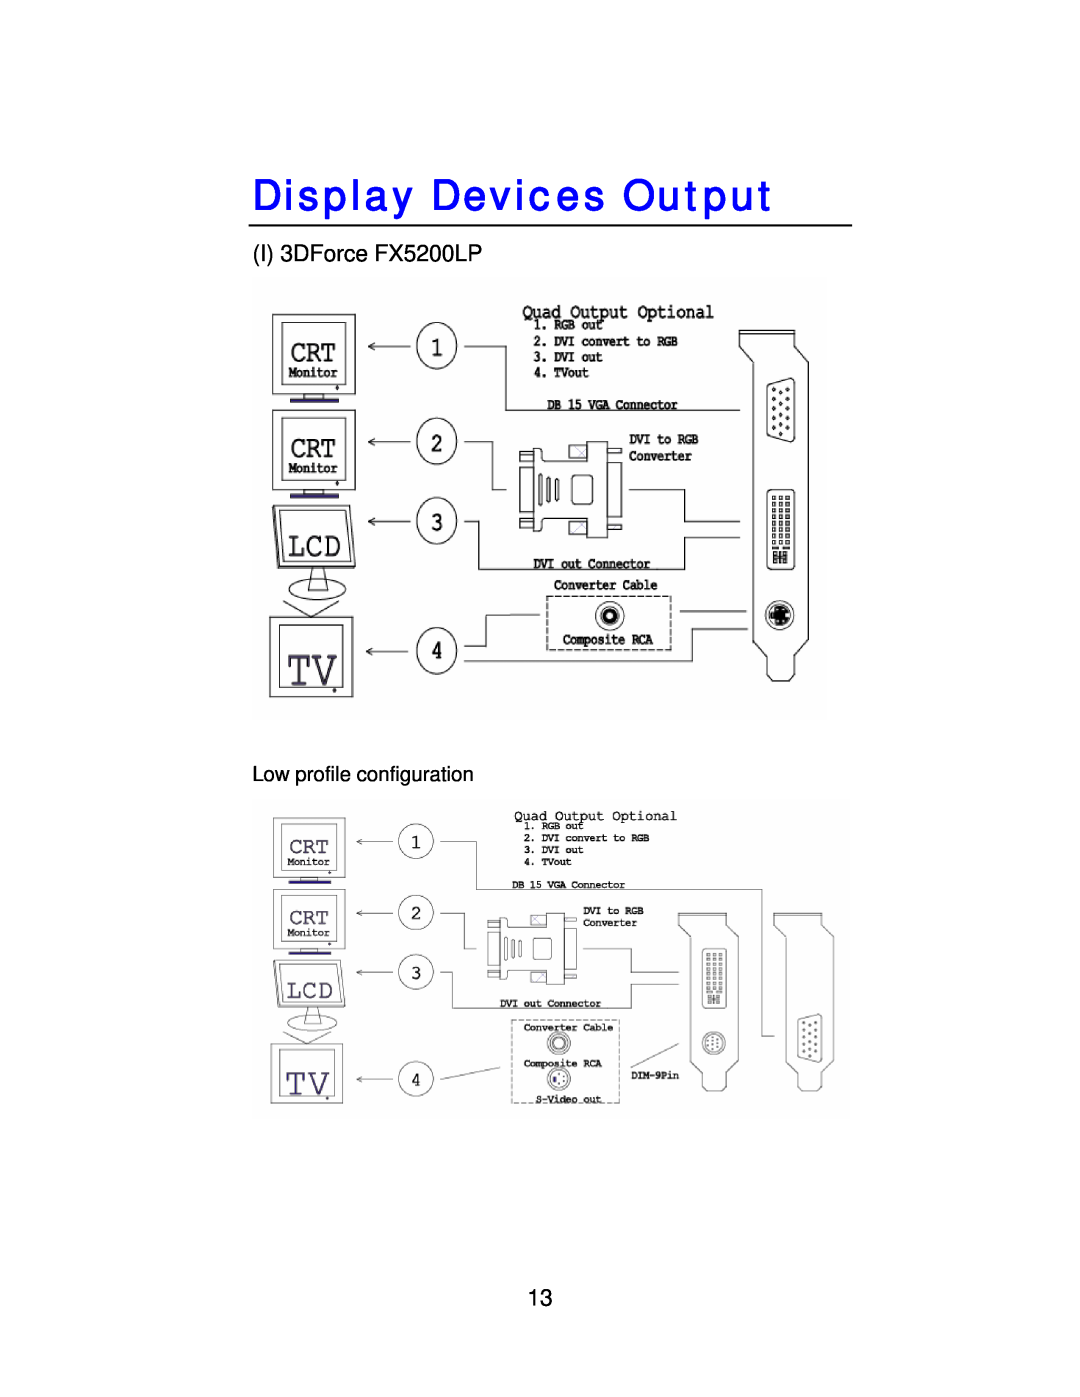 Jaton user manual Display Devices Output, I 3DForce FX5200LP 